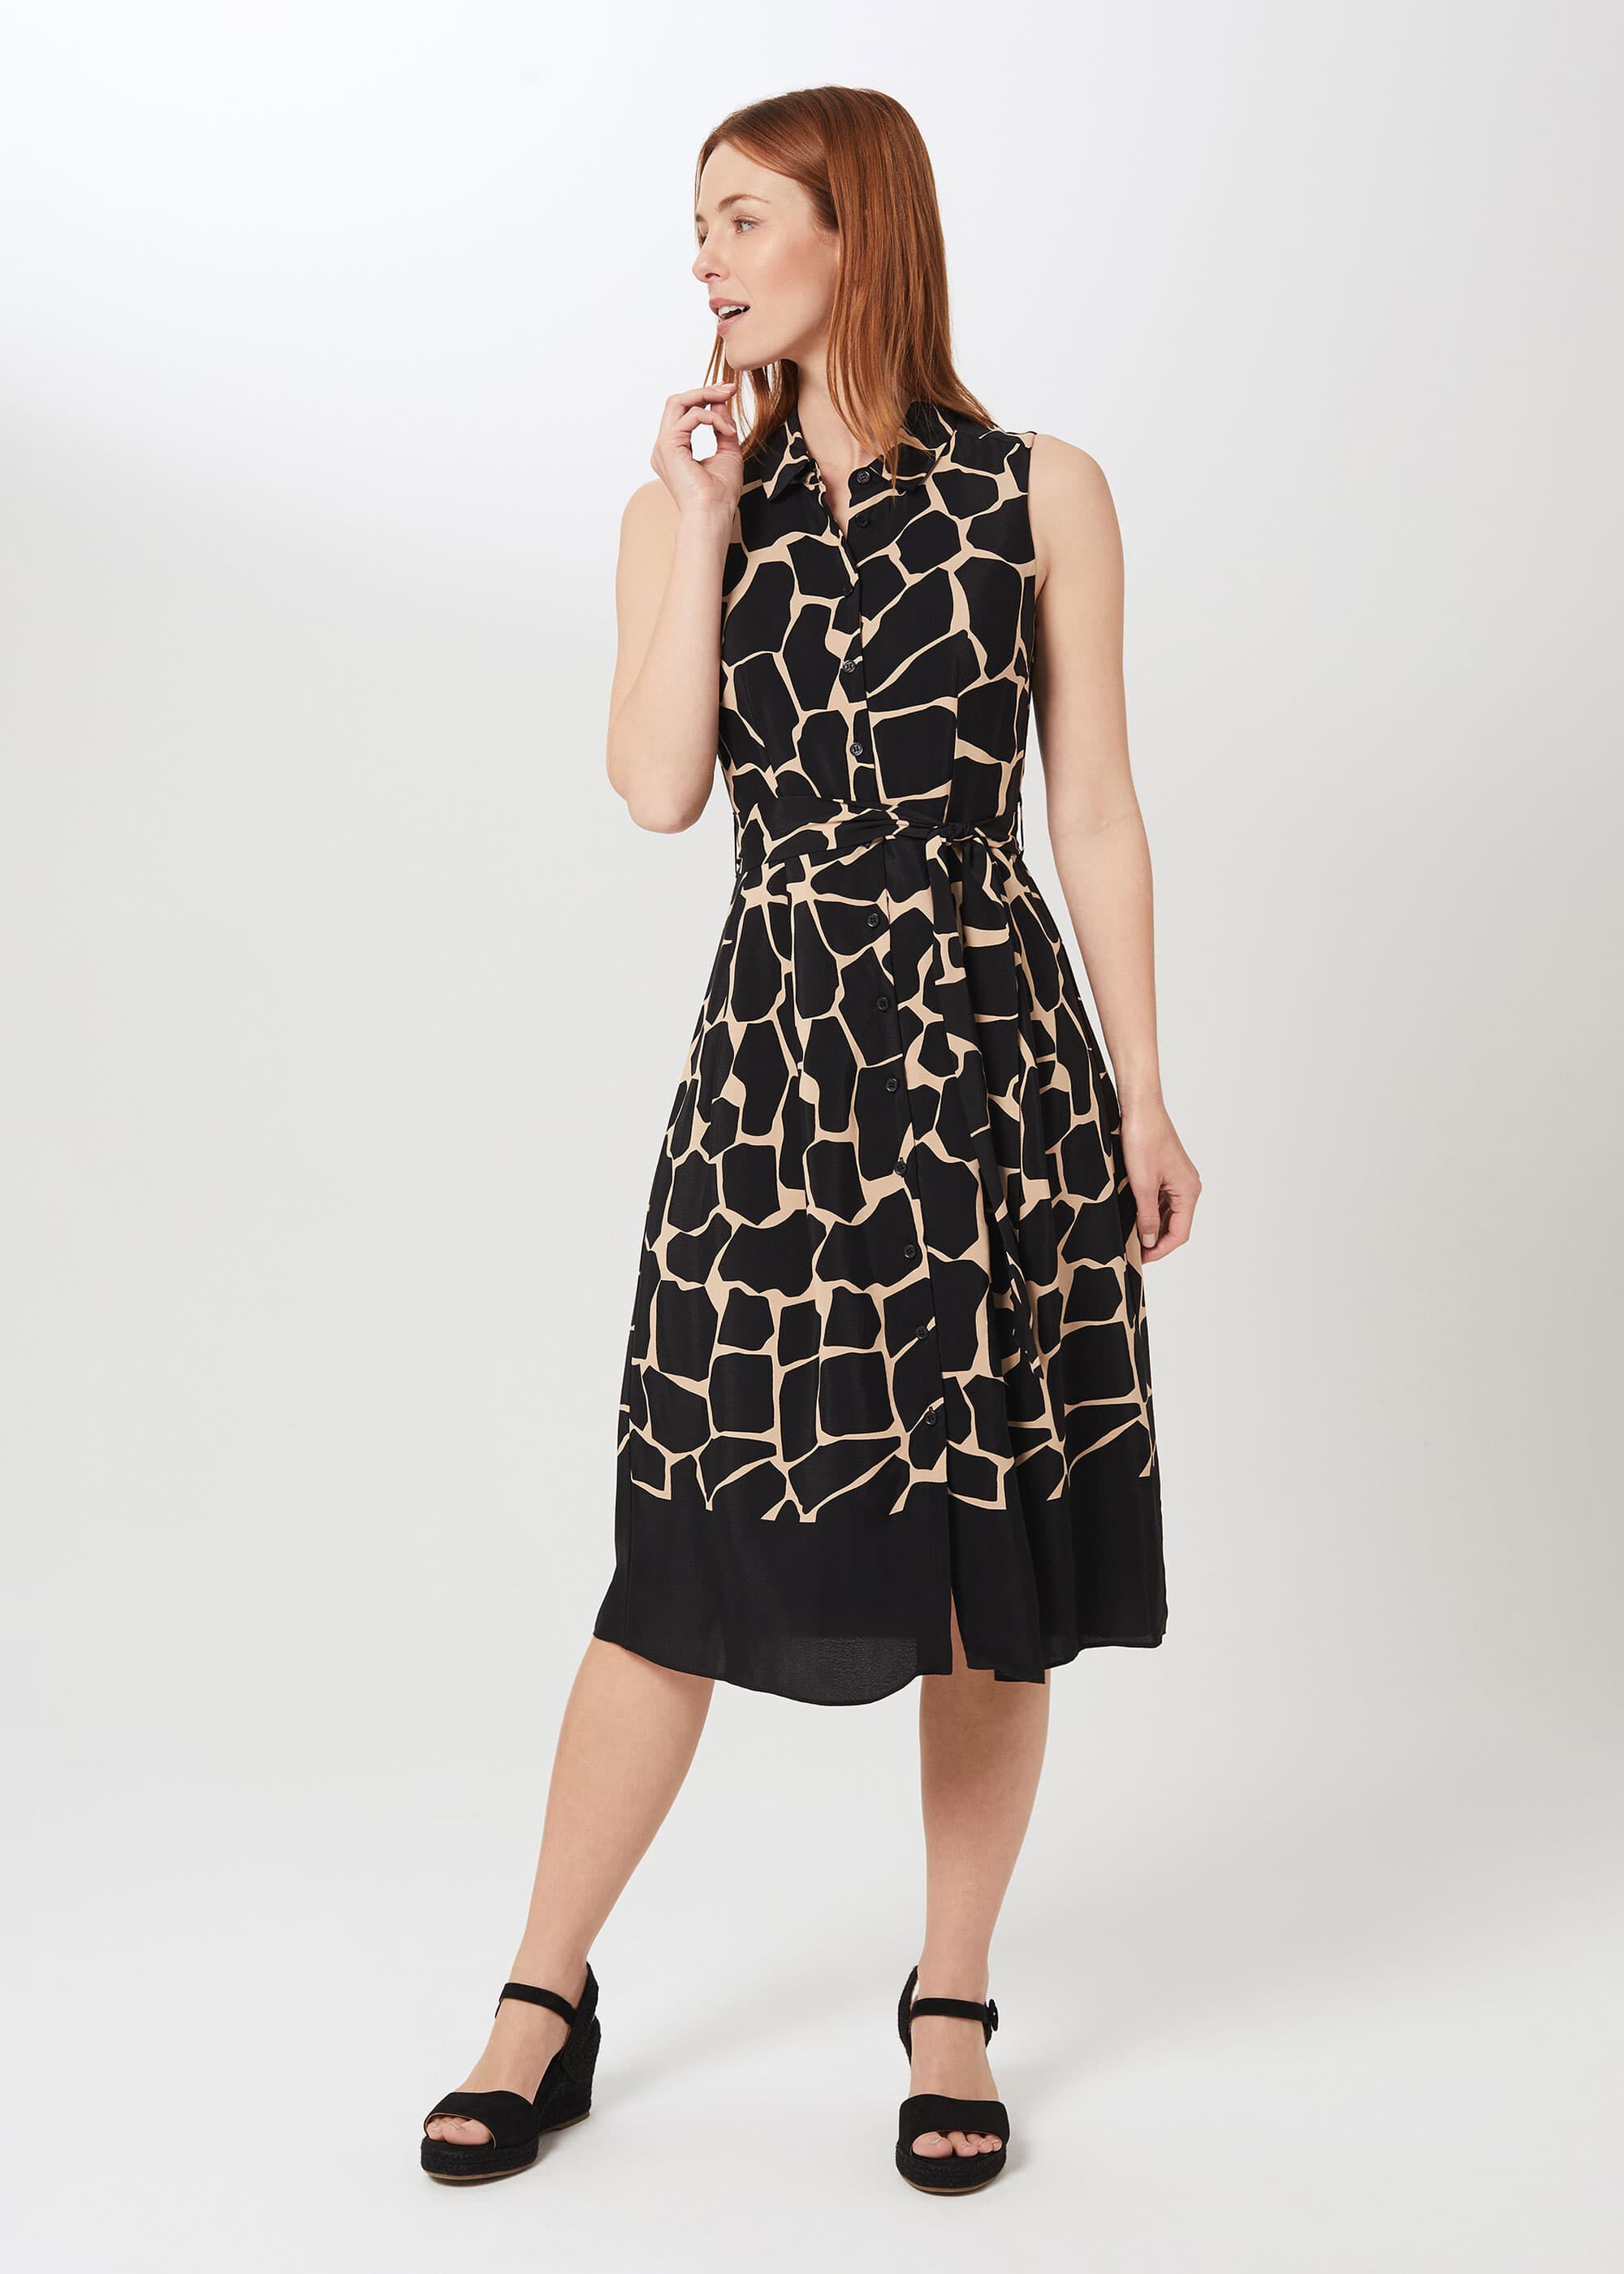 hobbs leopard print dress